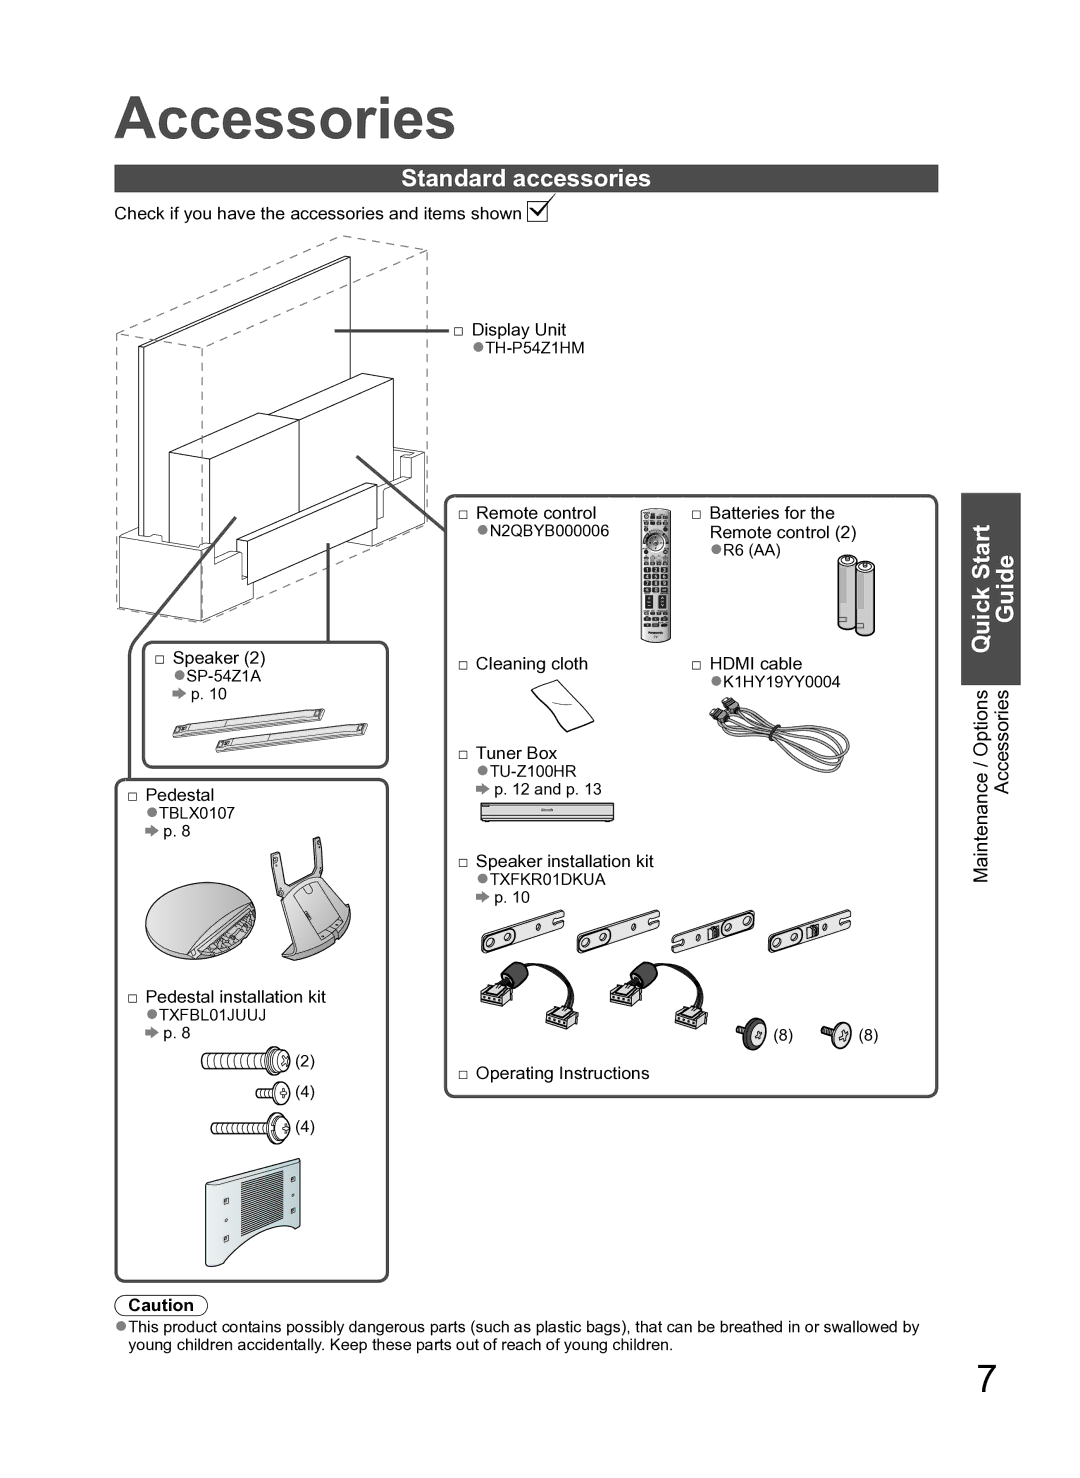 Panasonic TH-P54Z10H manual Accessories, Standard accessories, Quick Start Guide 